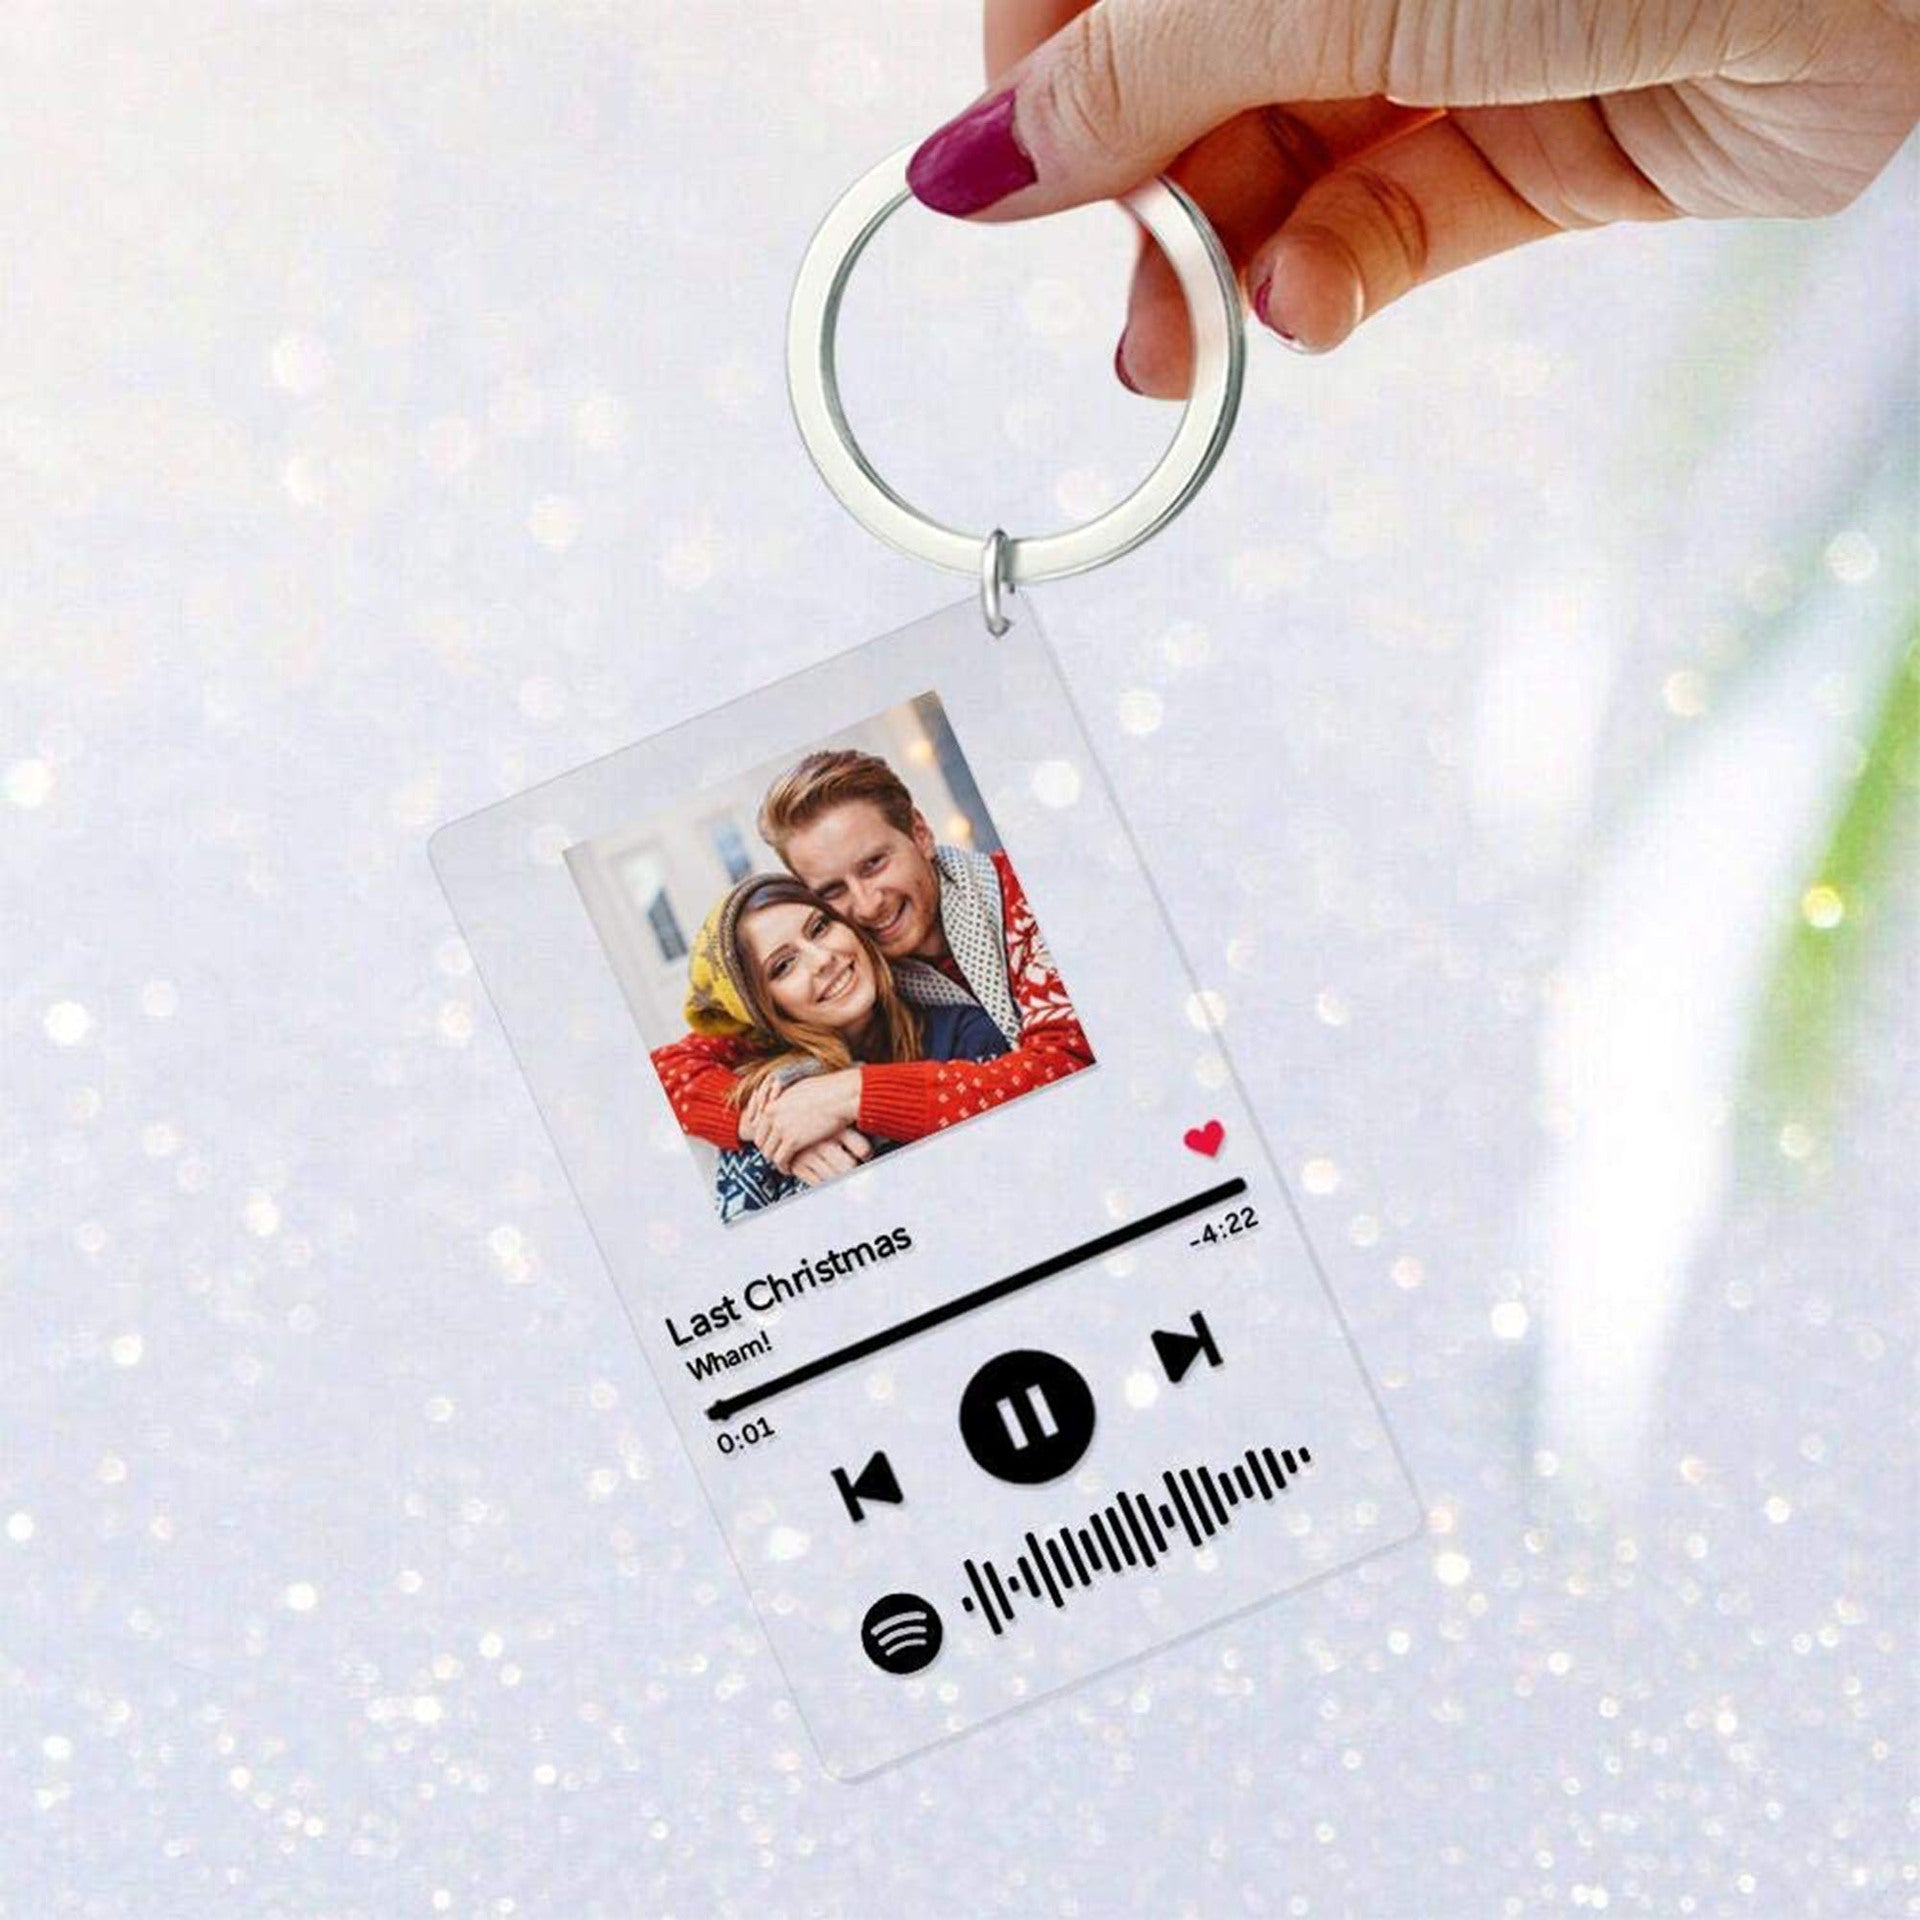 Personalize Acrylic Keychain Desktop Customize album cover Music Plaque Photo Keychain Emporium Discounts